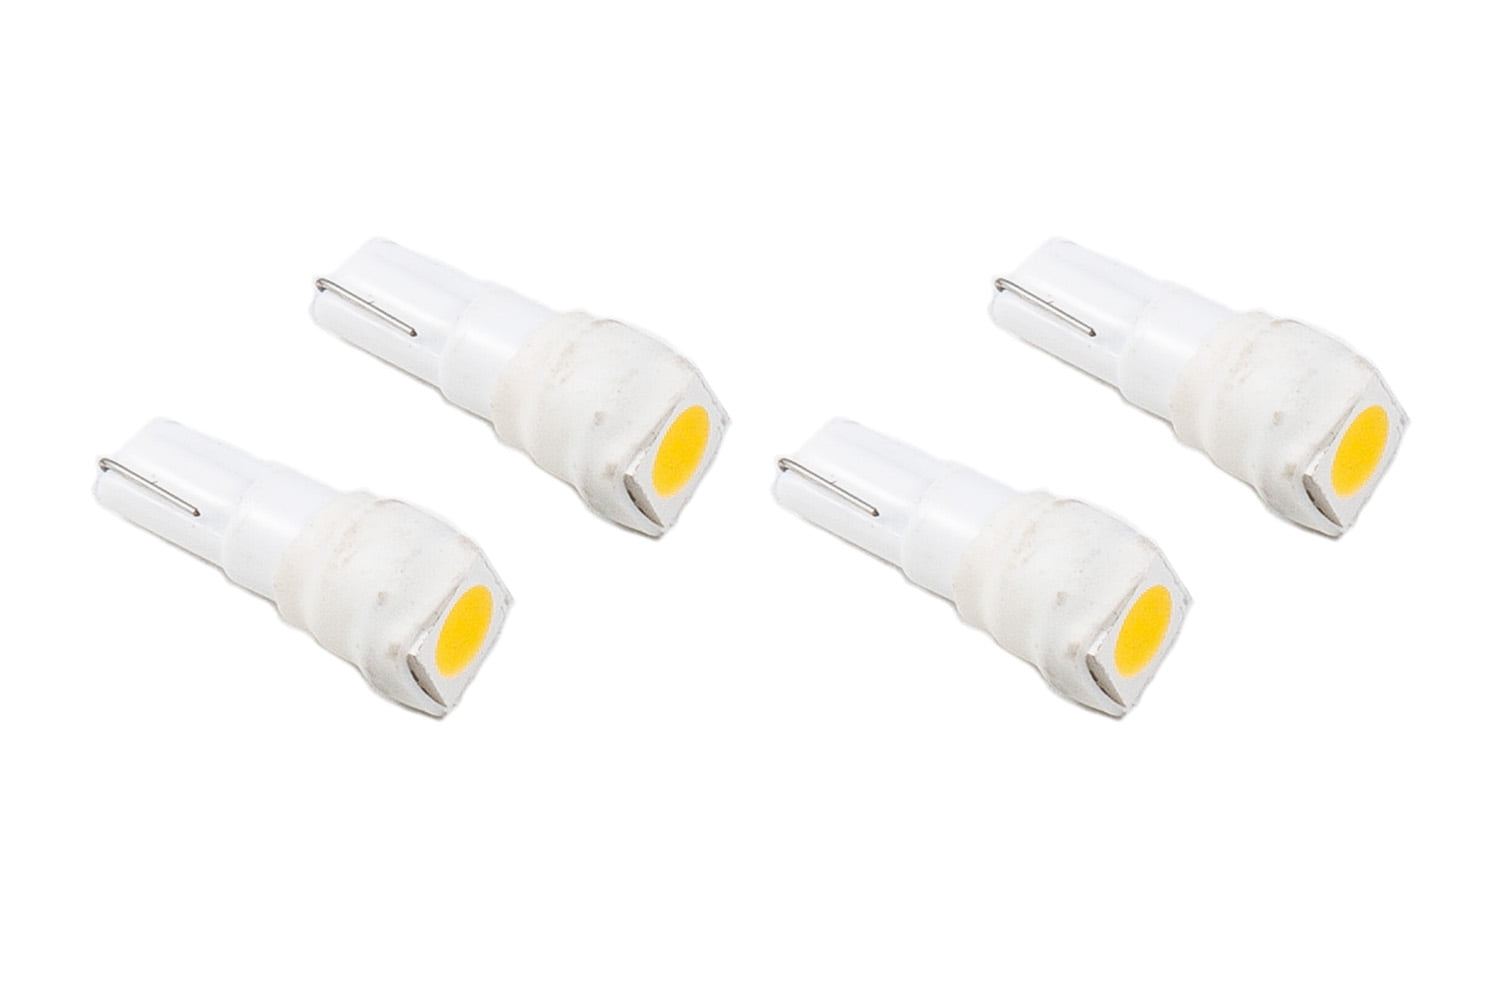 4PC H7 6500k Xenon White Effect Headlight Lamps Light 110w Bulbs 501 Led 12v